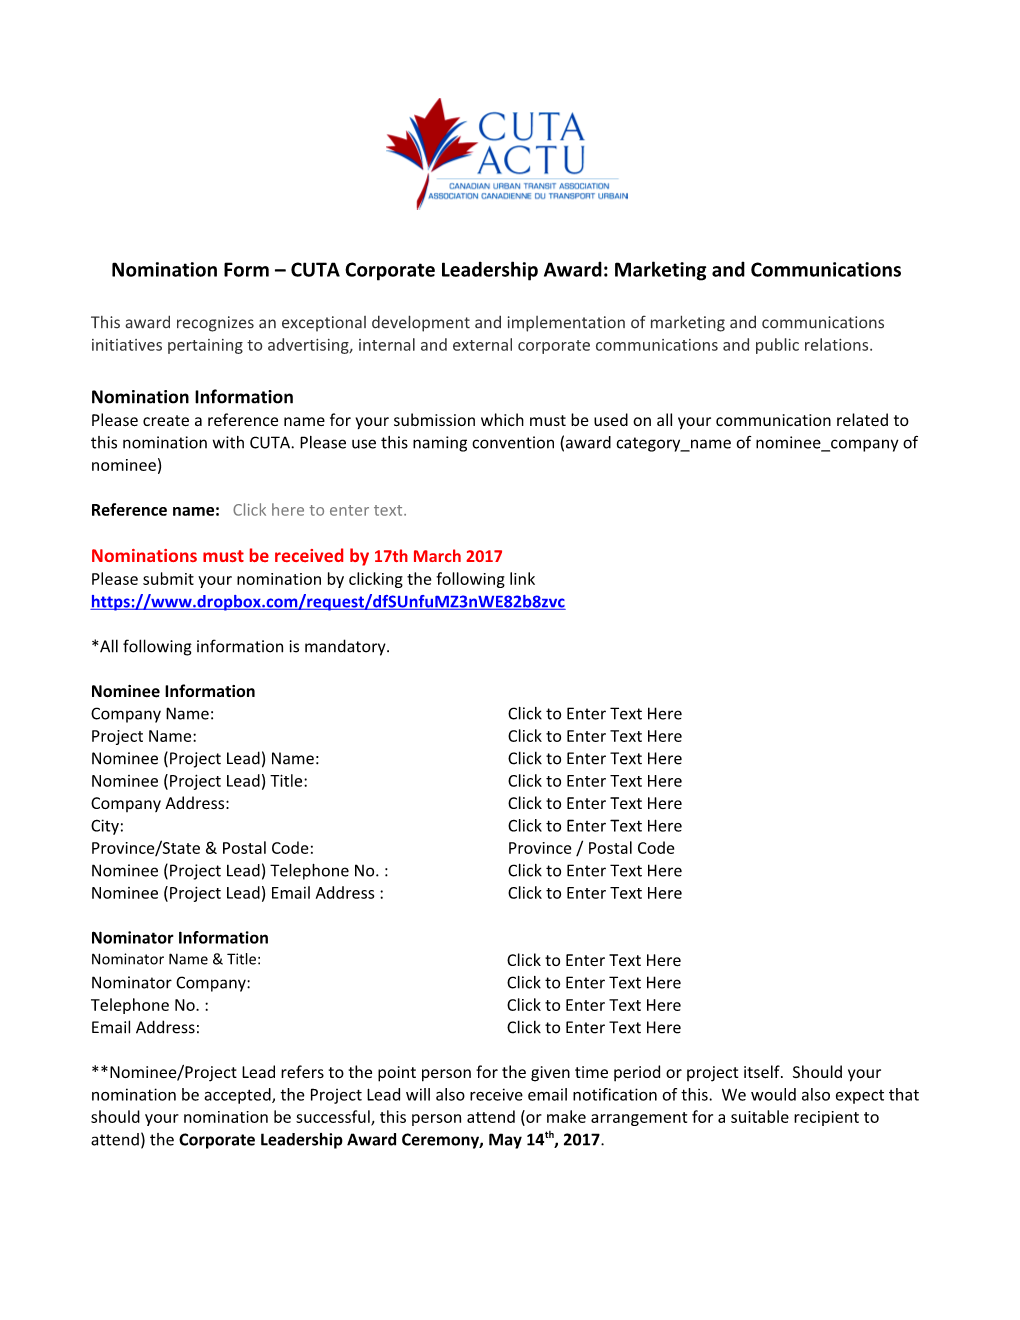 Nomination Form CUTA Corporate Leadership Award:Marketing and Communications